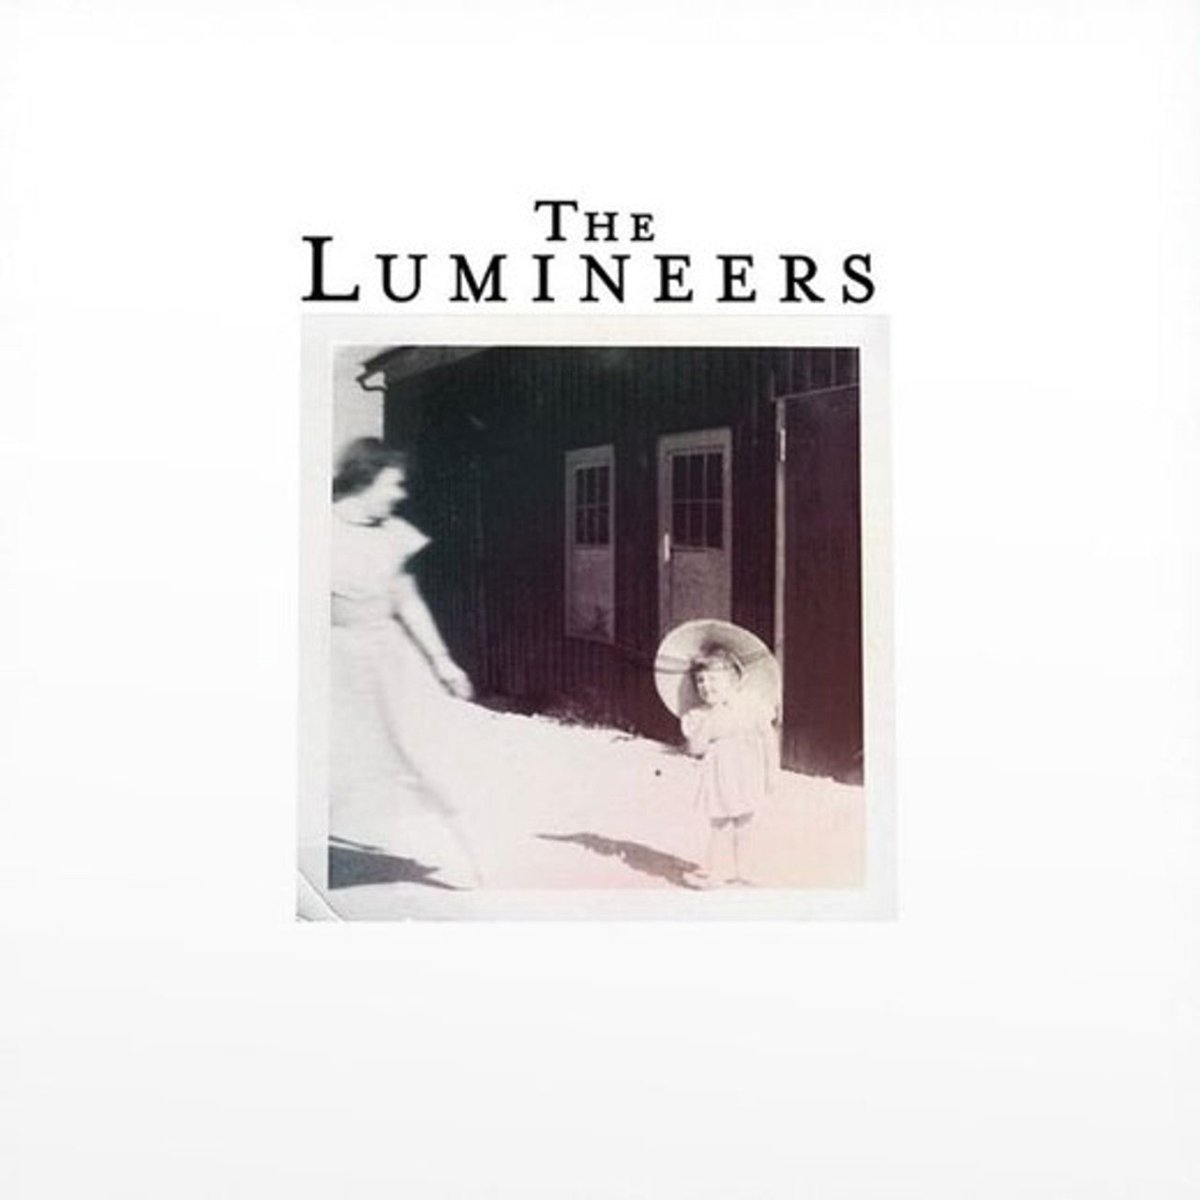 The Lumineers - The Lumineers - 10th Anniversary Edition Vinyl